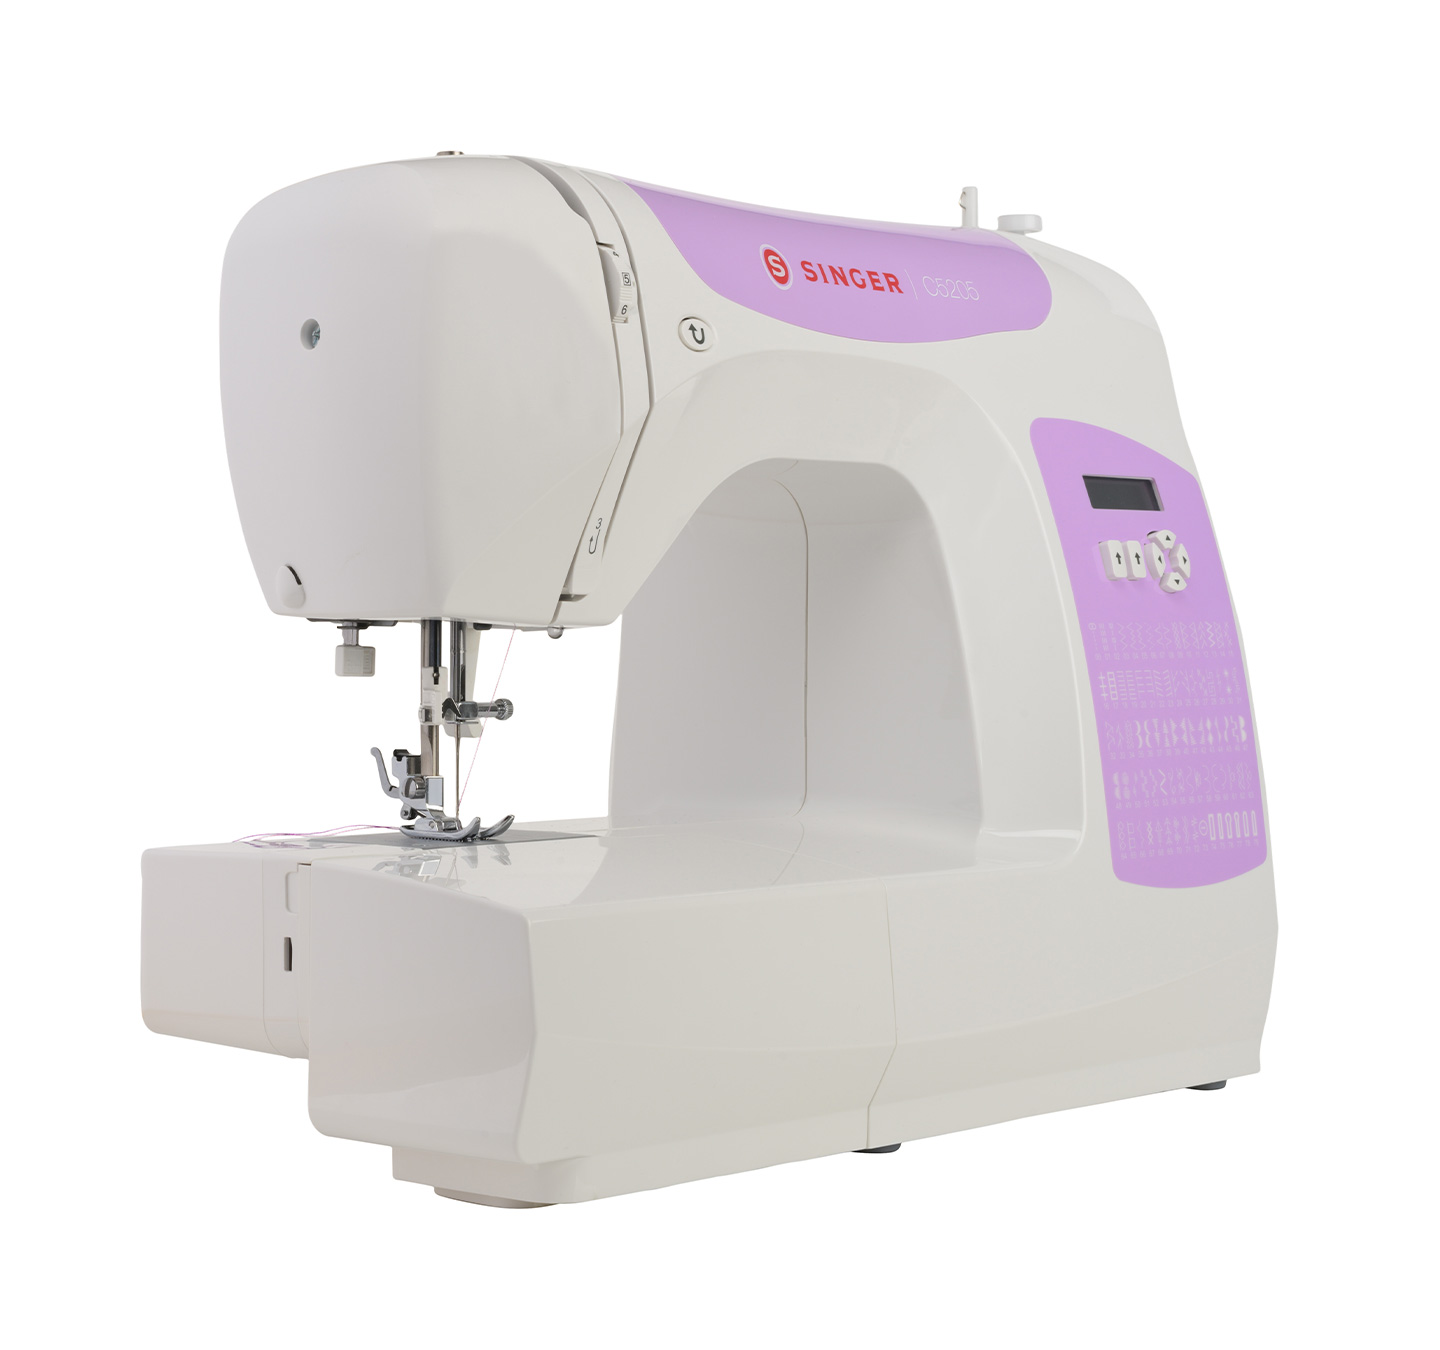 Machine C5205-PR Household Sewing Machines Electronic < Singer SINGER < - Sewing